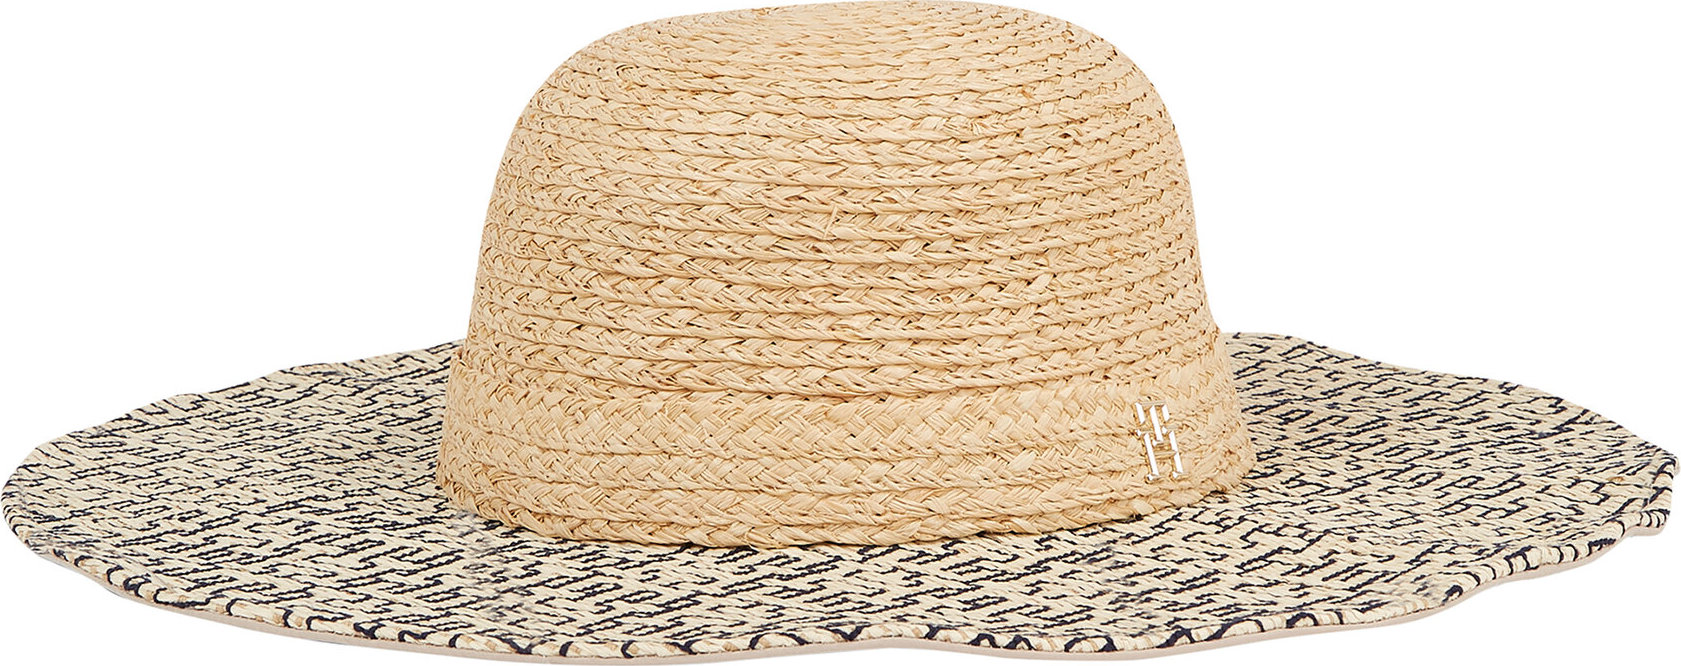 Klobouk Tommy Hilfiger Beach Summer Straw Hat AW0AW16042 Calico AEF